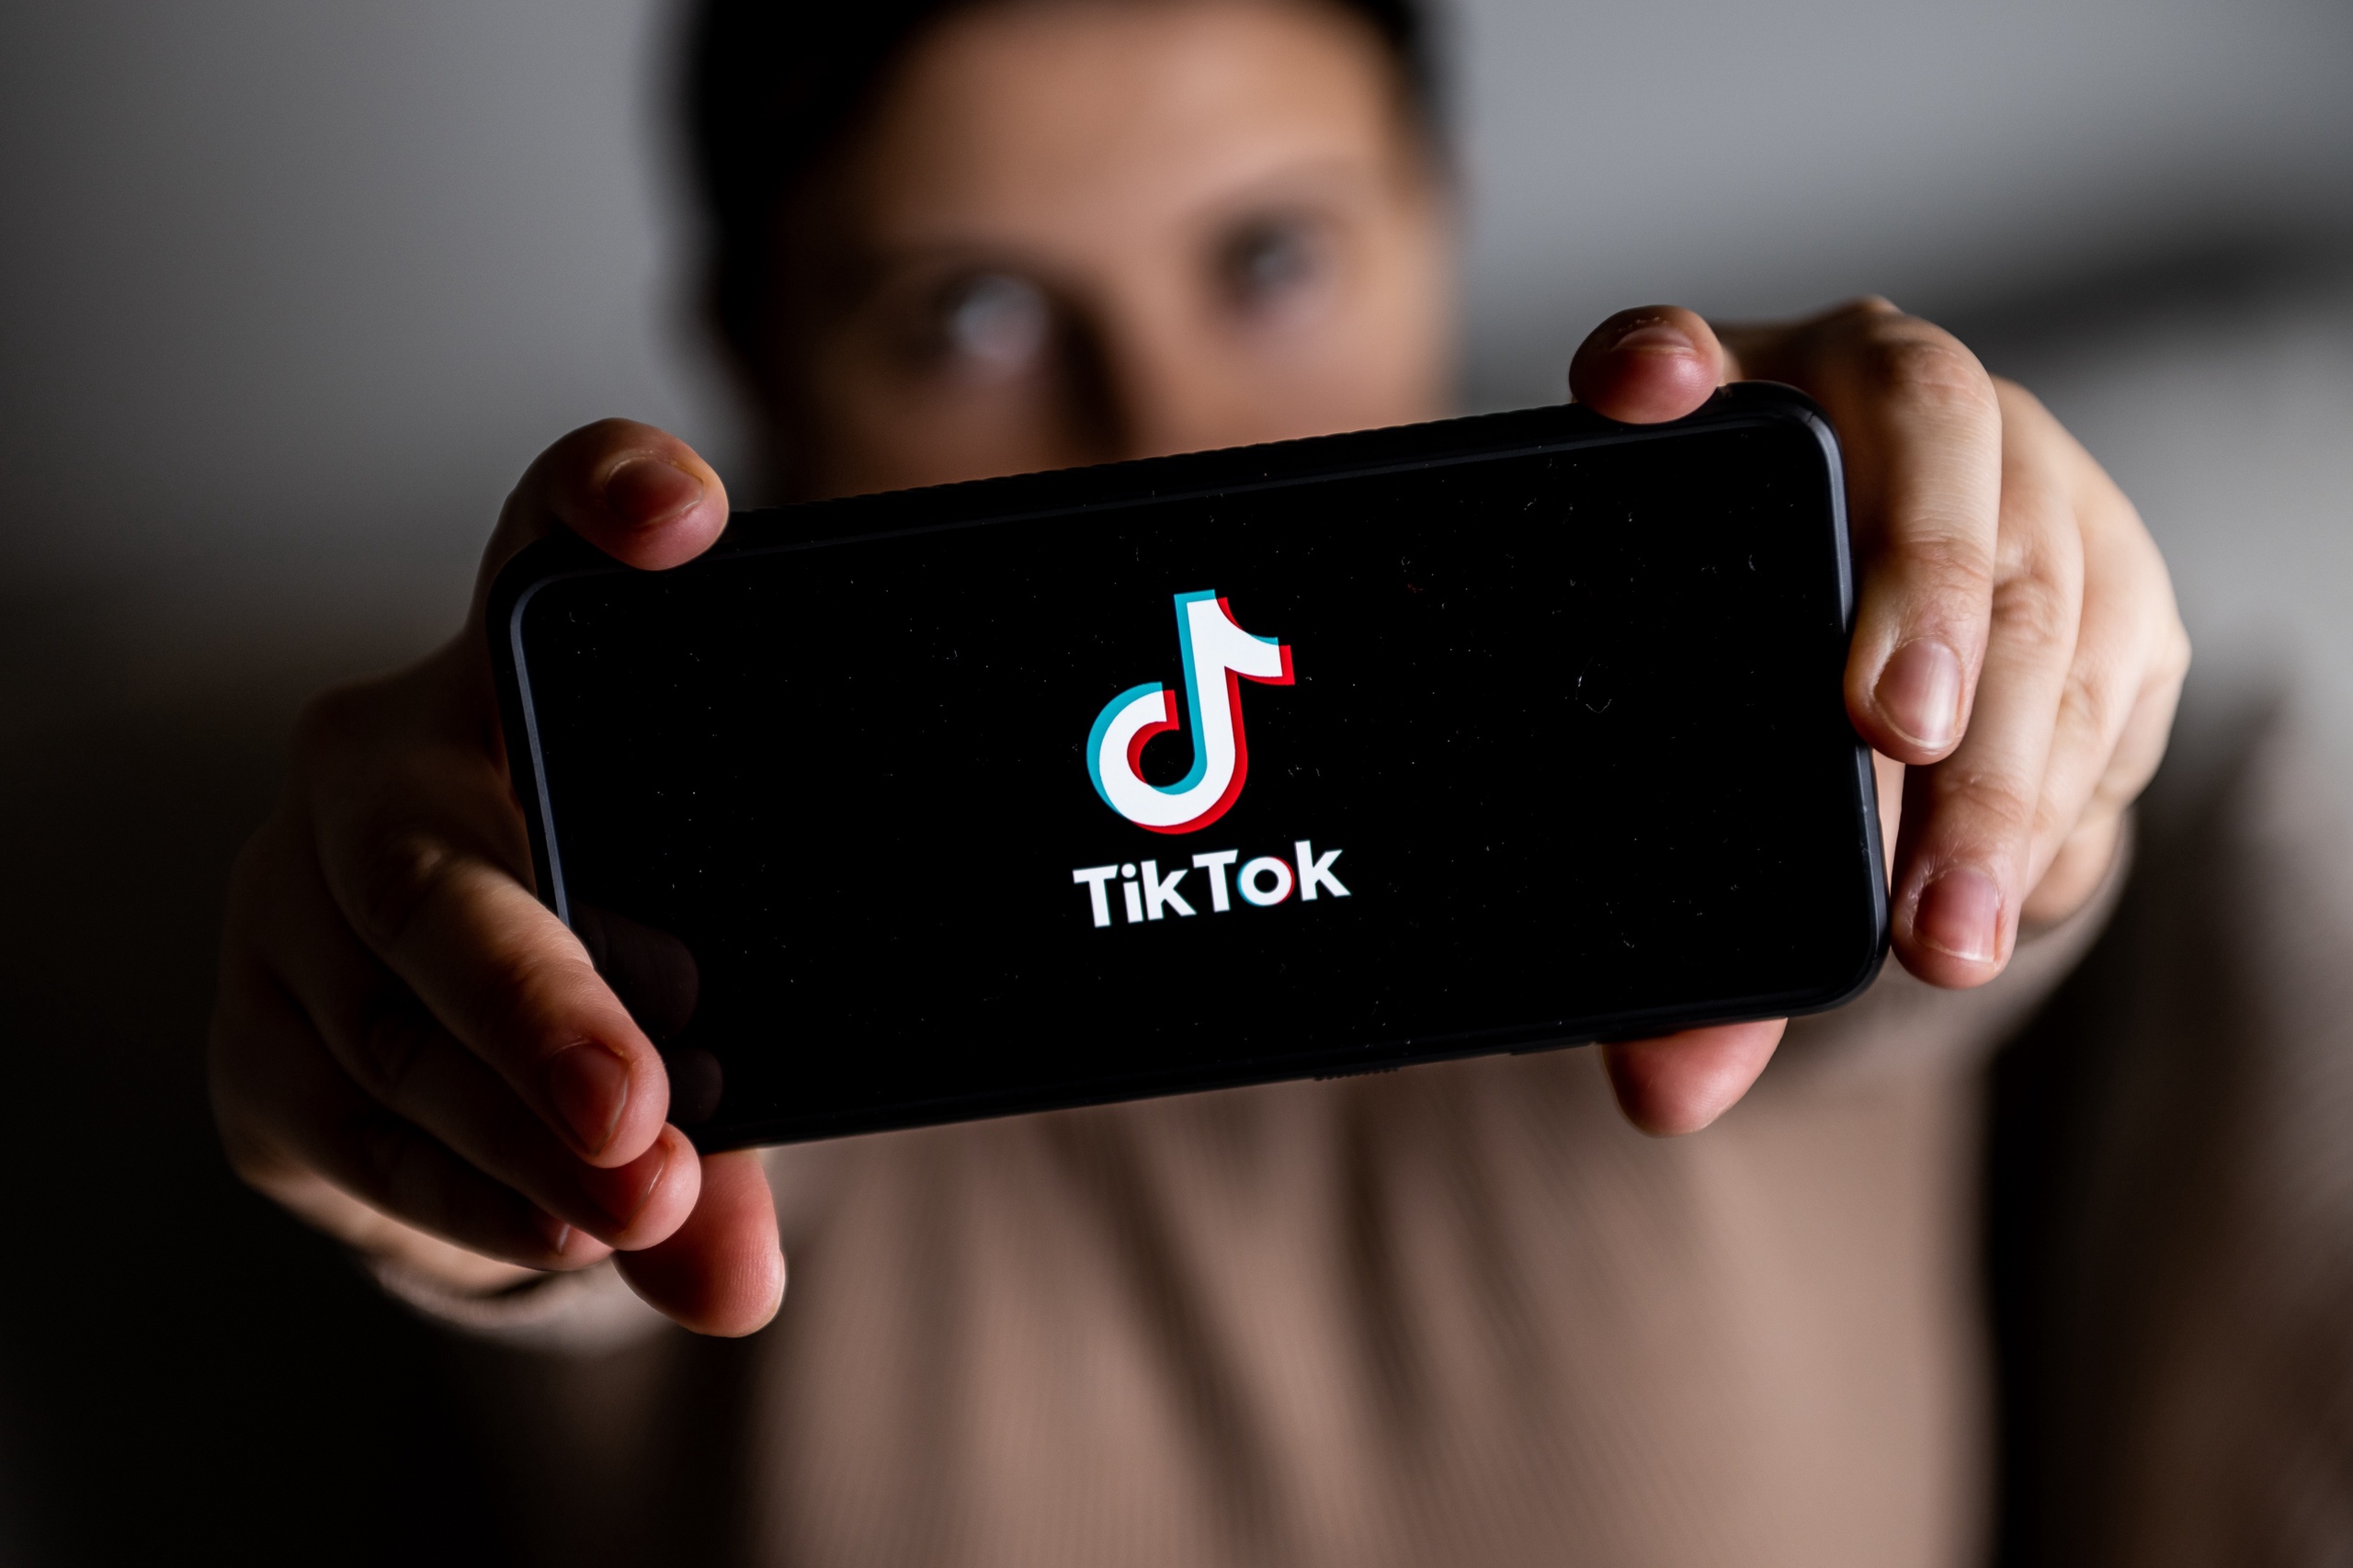 A man holding a phone with TikTok logo